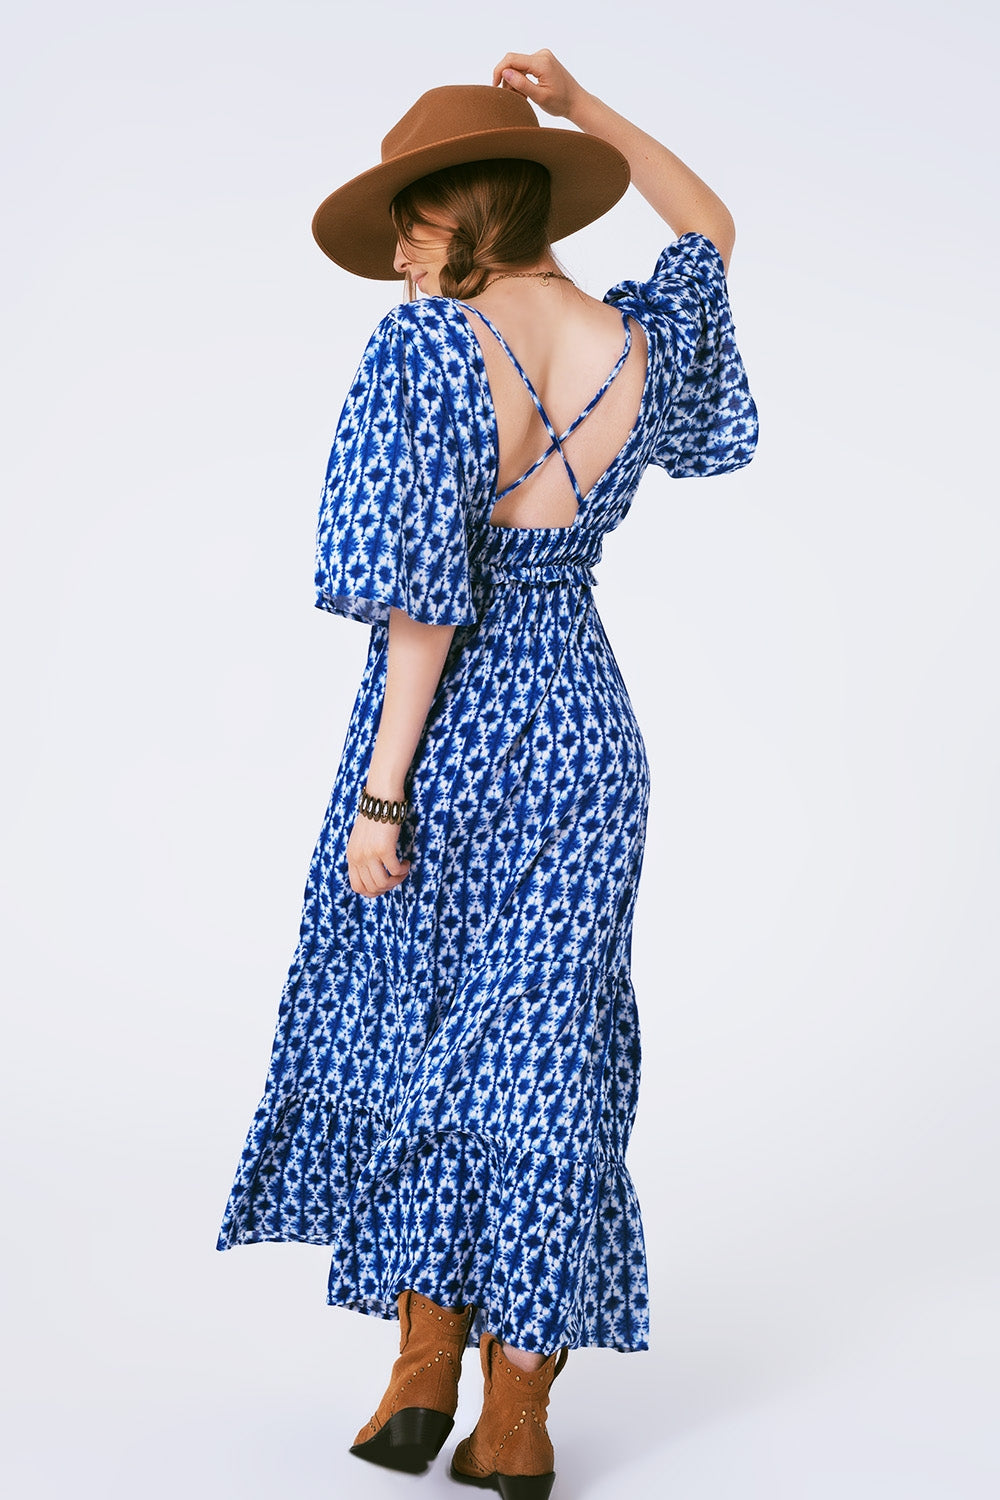 Boho print maxi dress crossed on the back - Szua Store